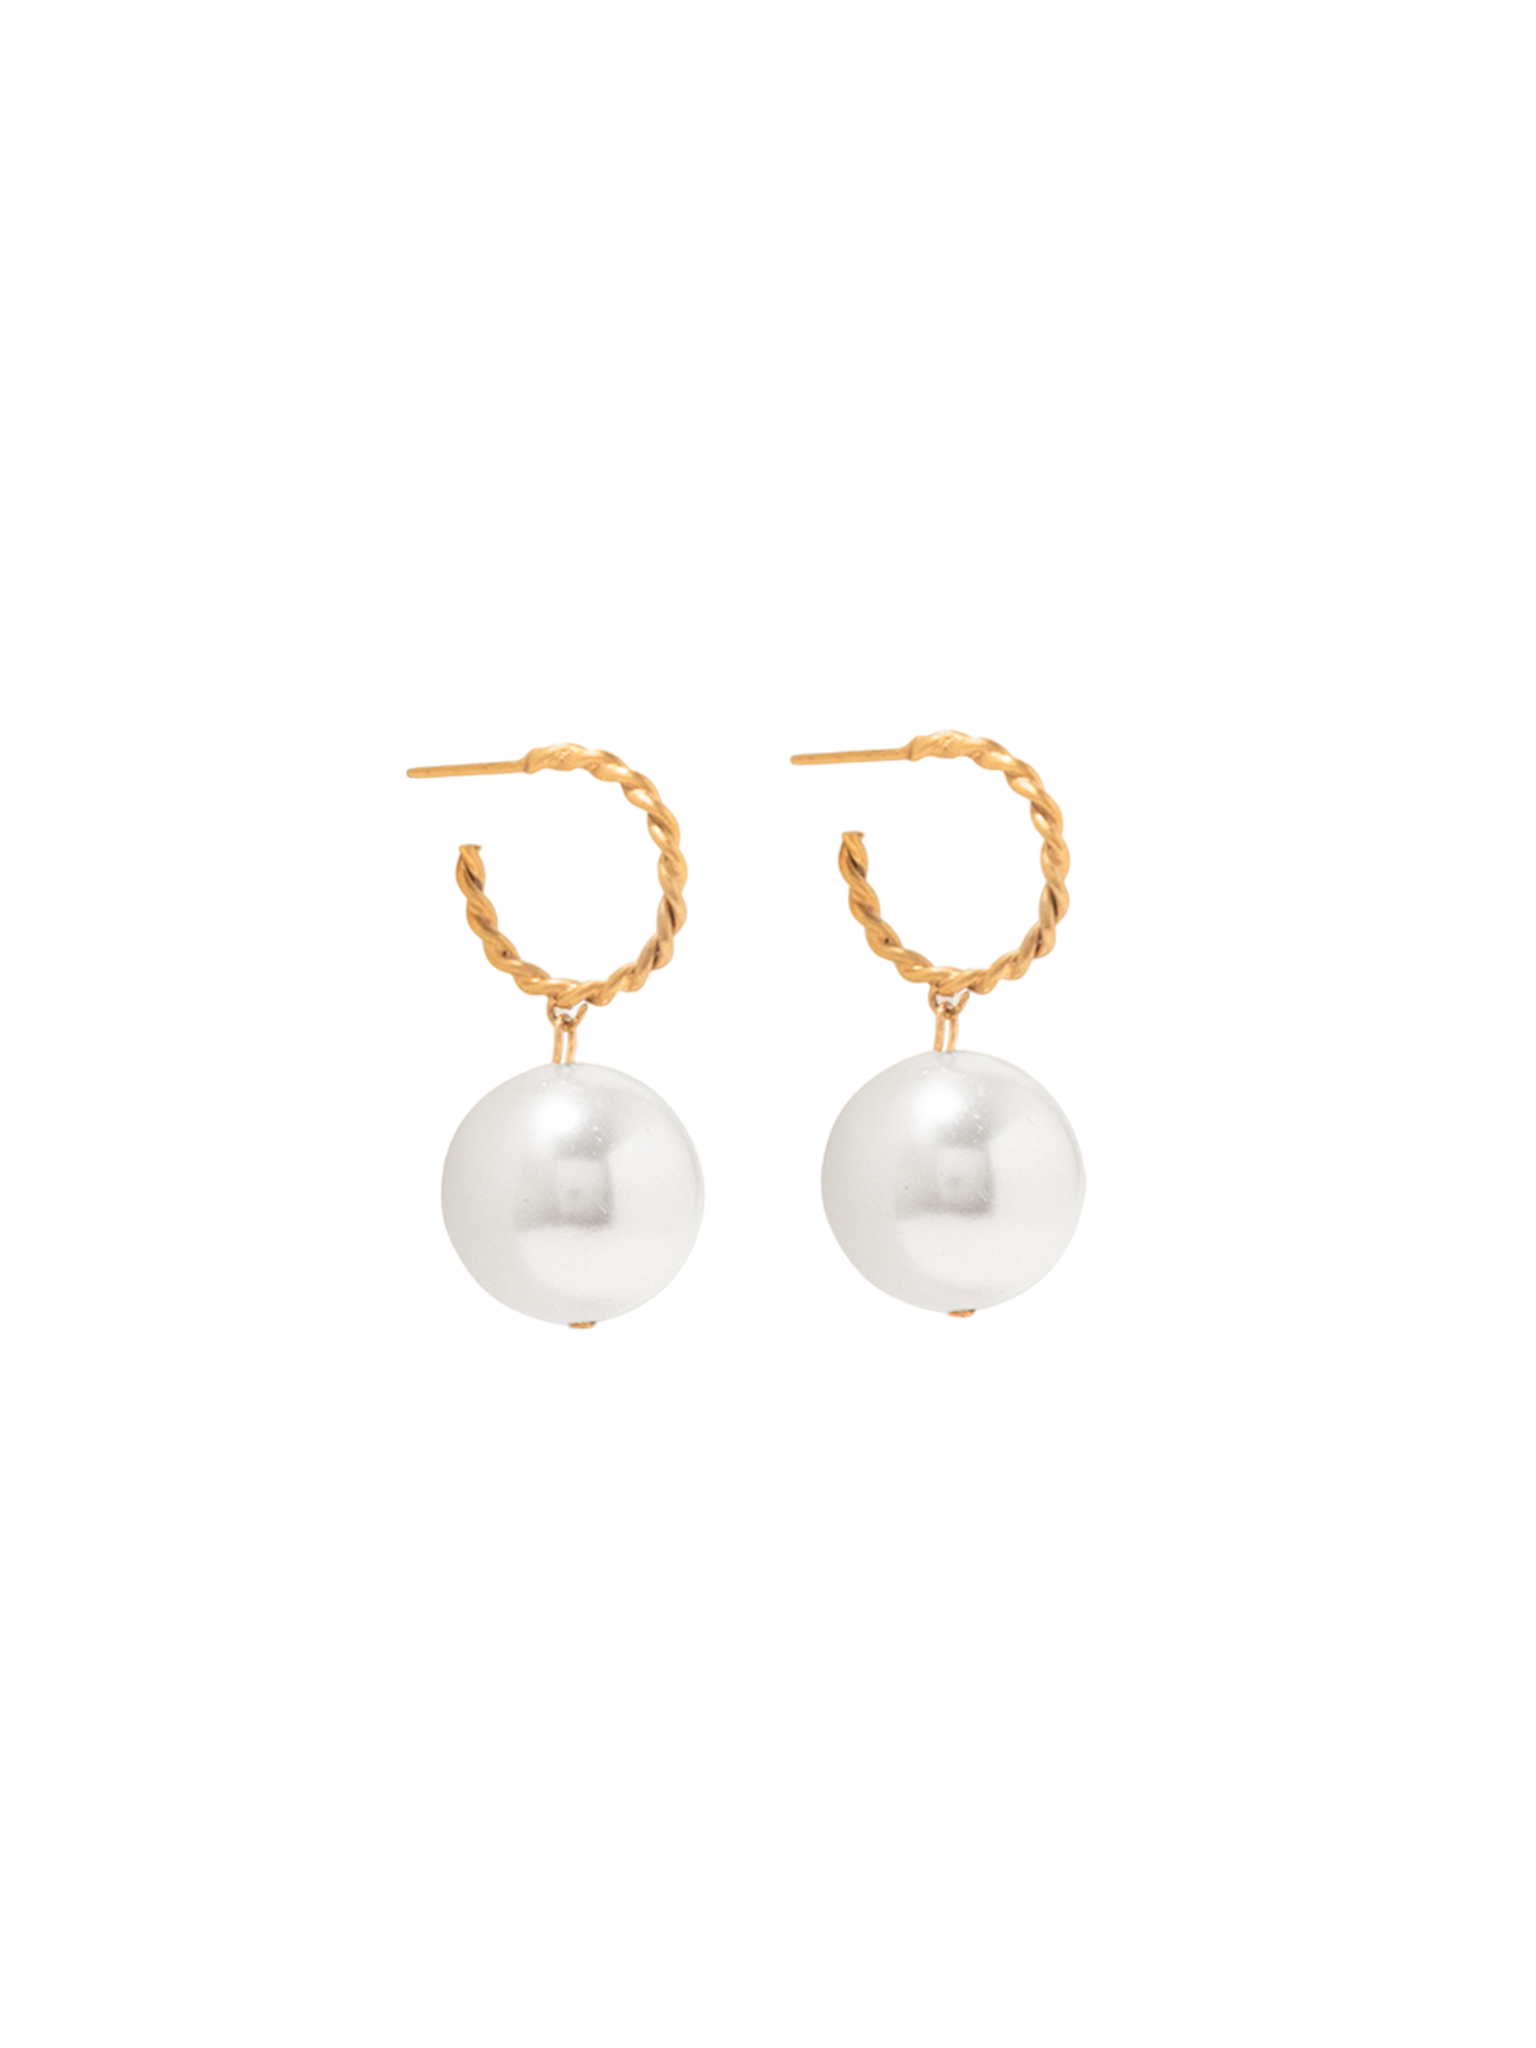 Granny smith pearl earrings